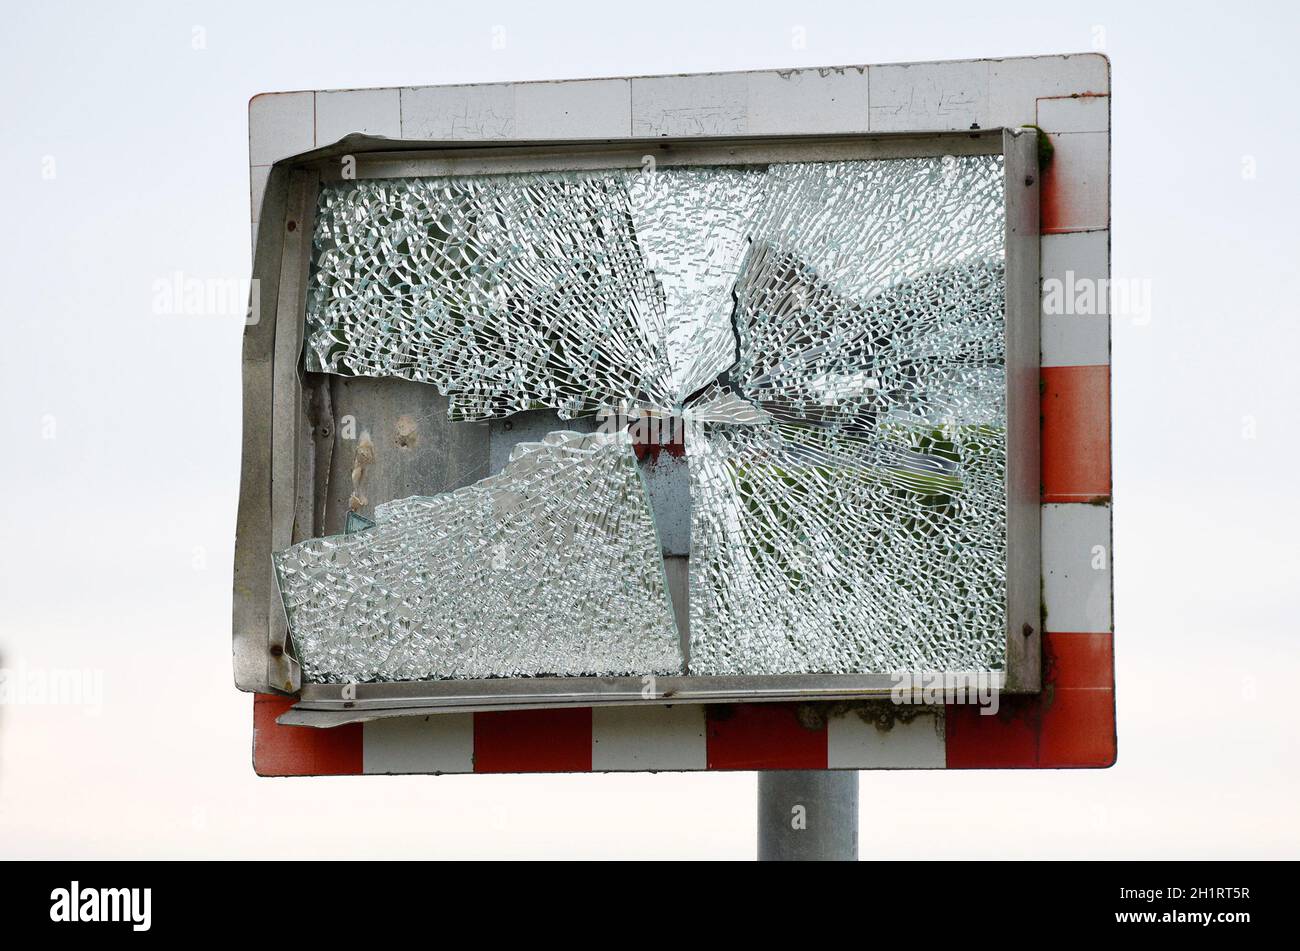 Zerbrochener, beschädigter Verkehrsspiegel - Broken, damaged traffic mirror Stock Photo